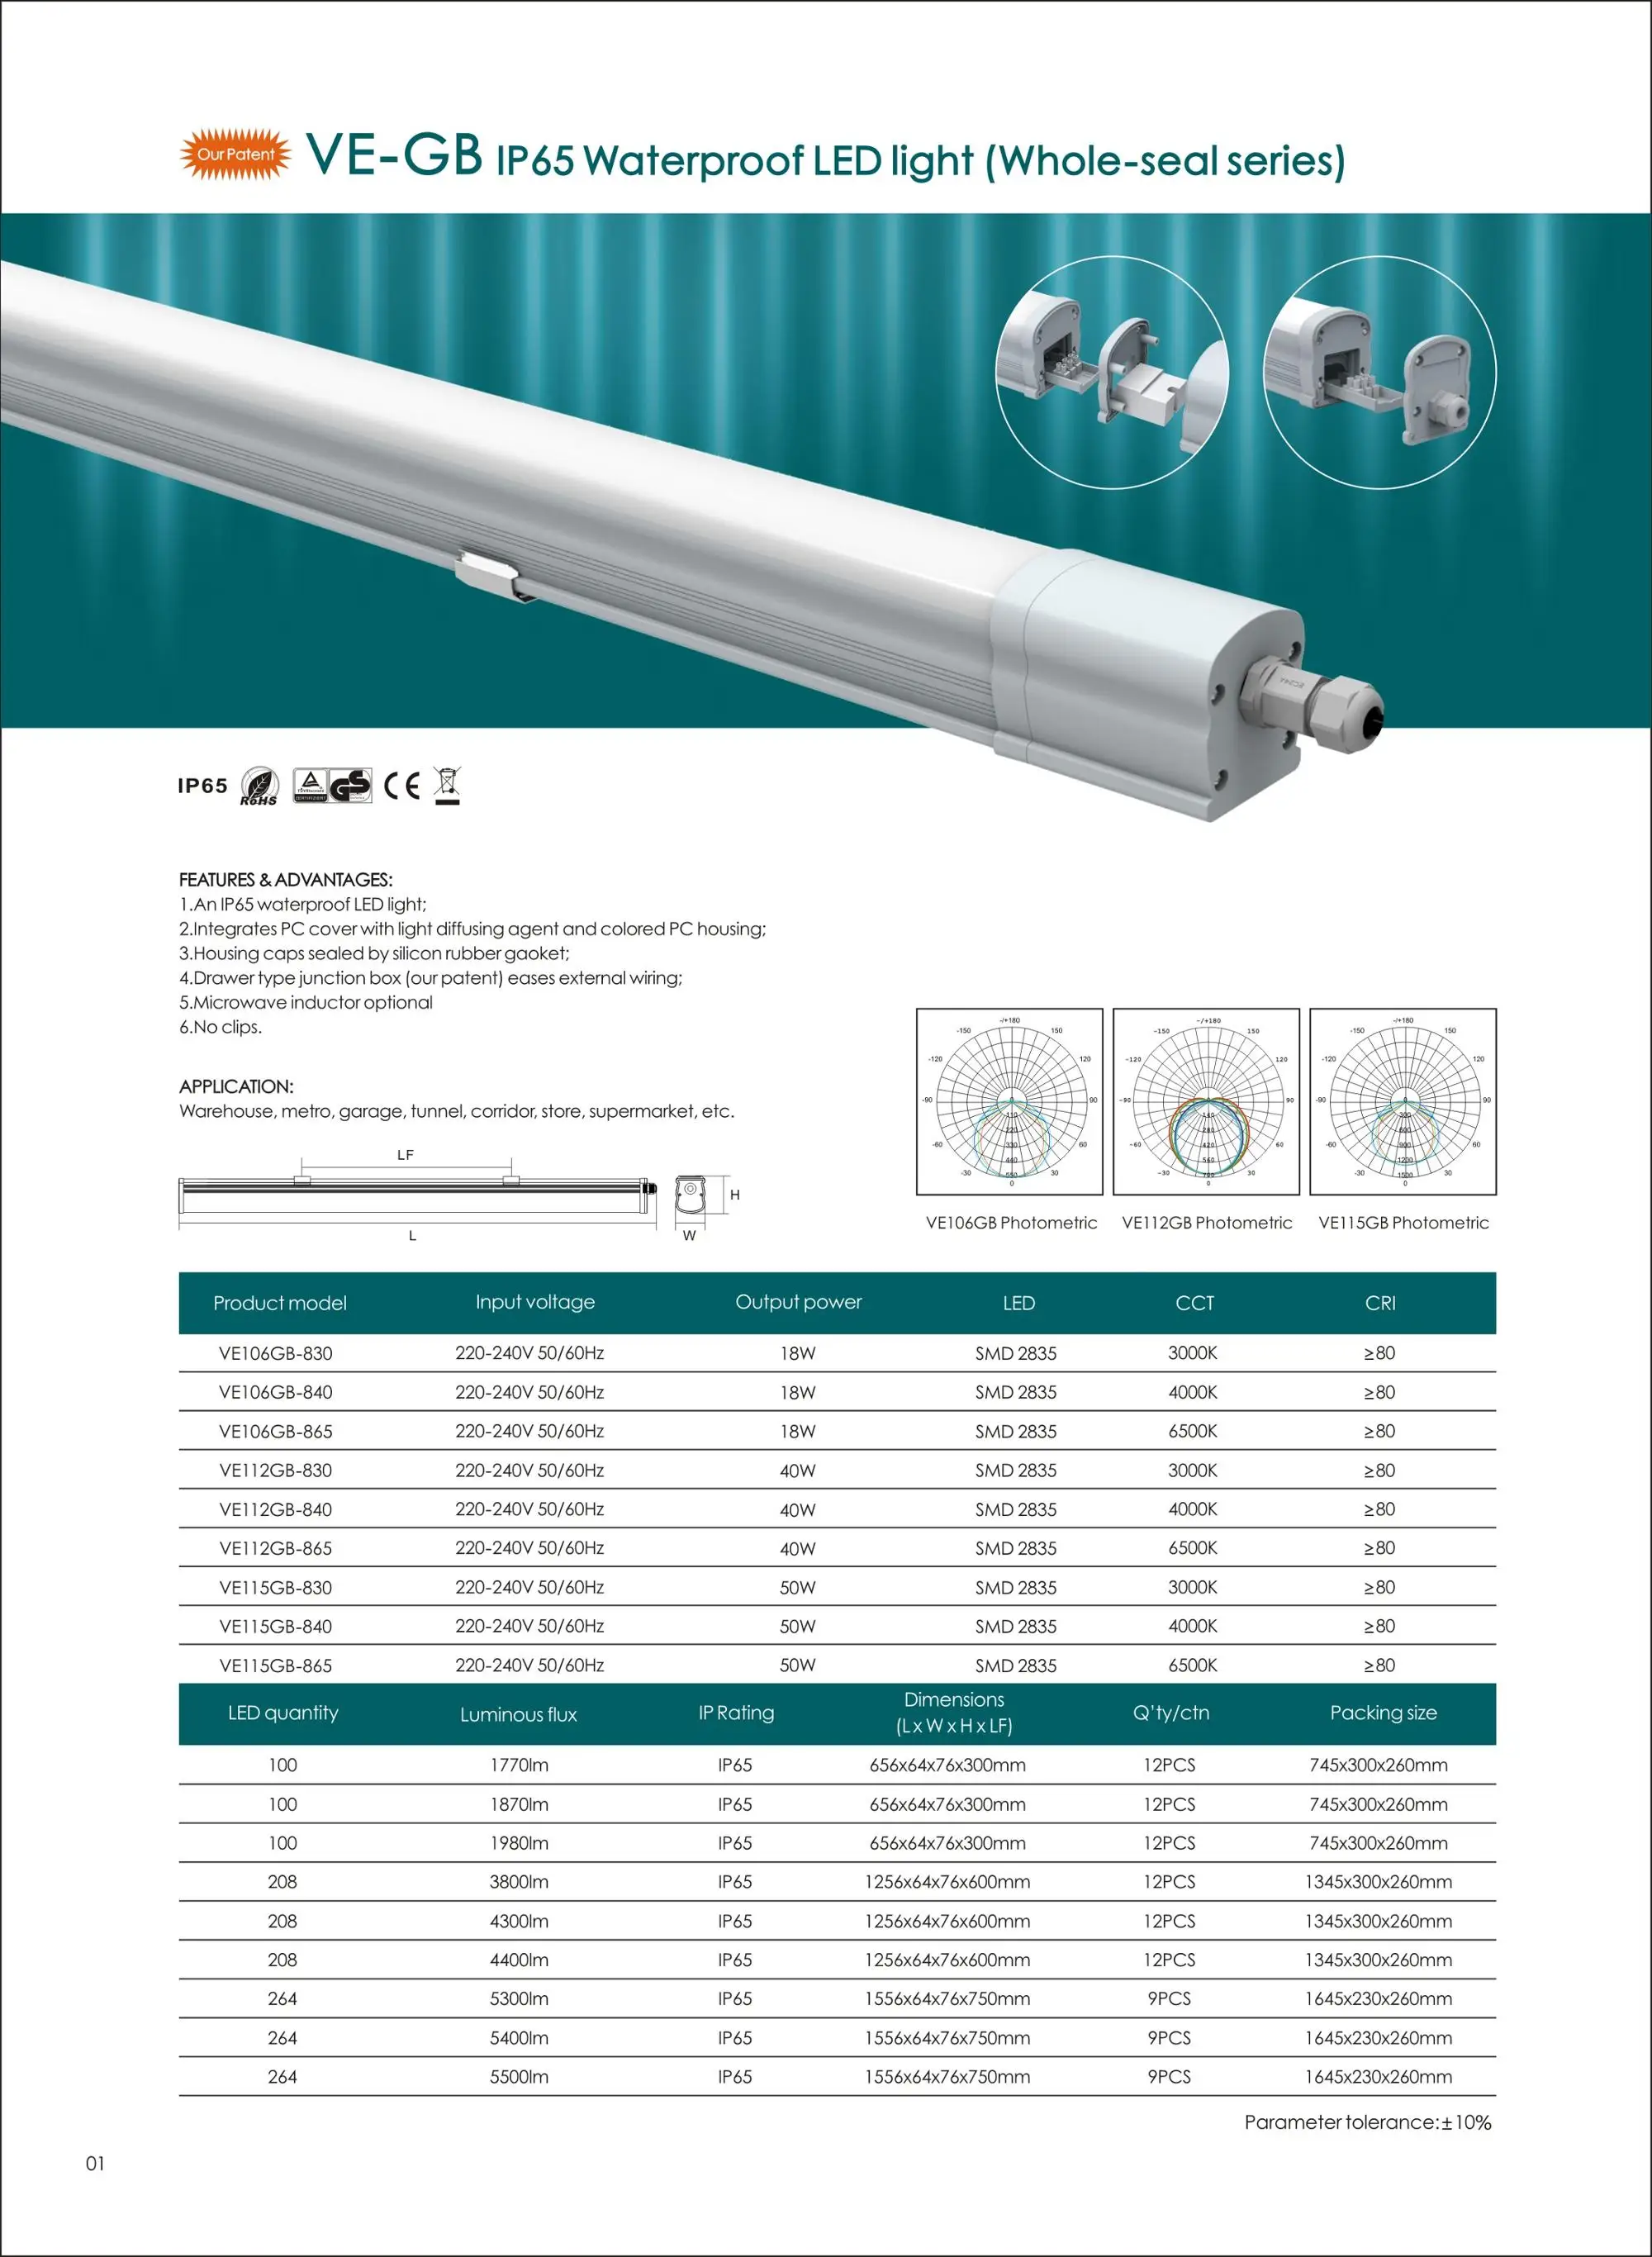 2017 hot sale china supplier waterproof light 1.5m length linear led light fixture